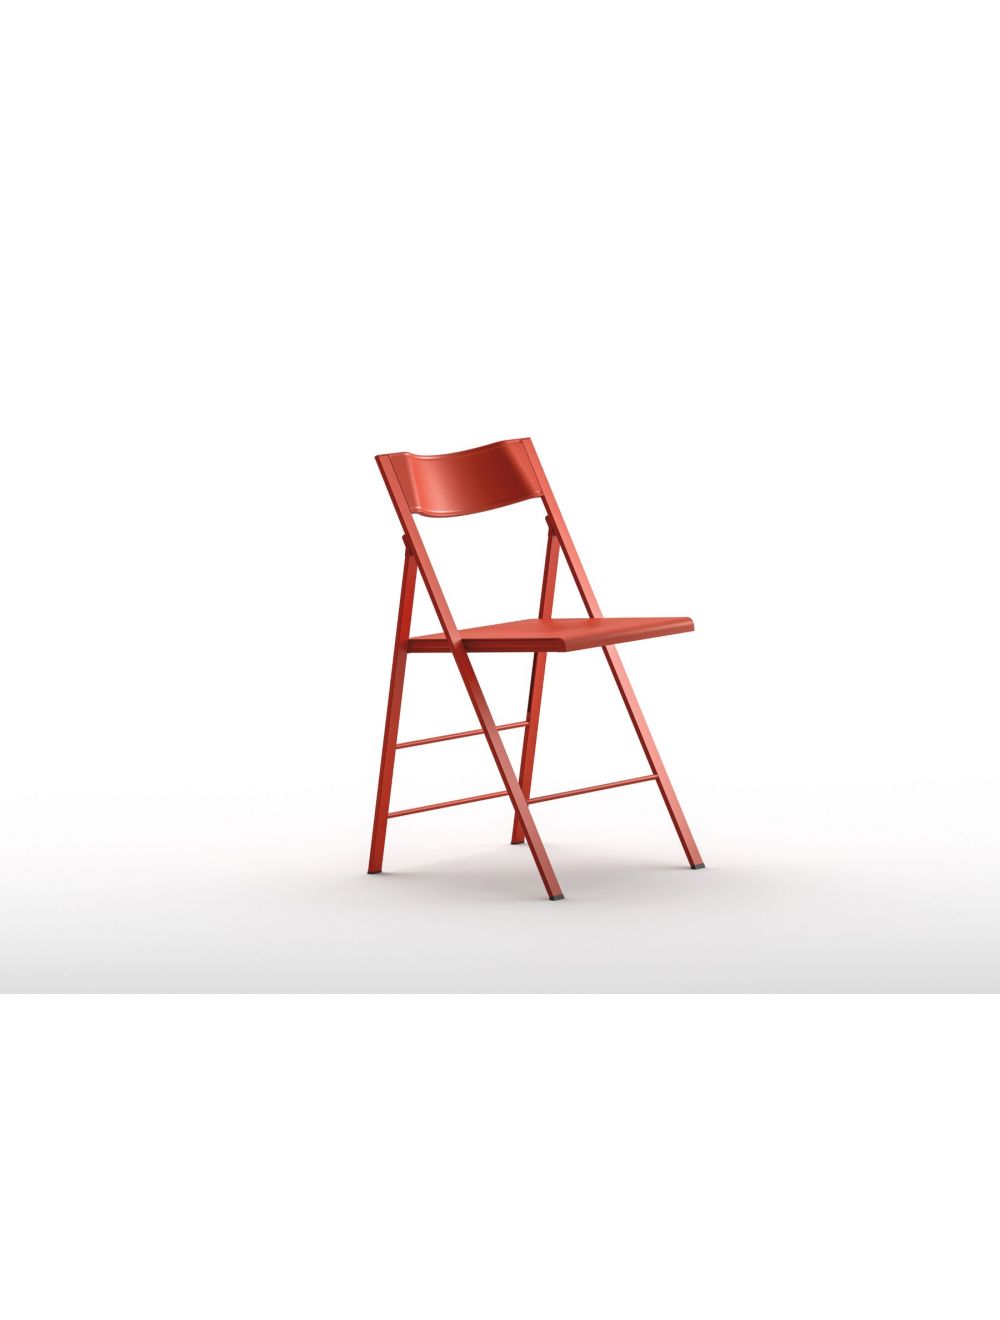 forecast Integral Childish Pocket Plastic Folding Chair Arrmet | Sedie.Design®